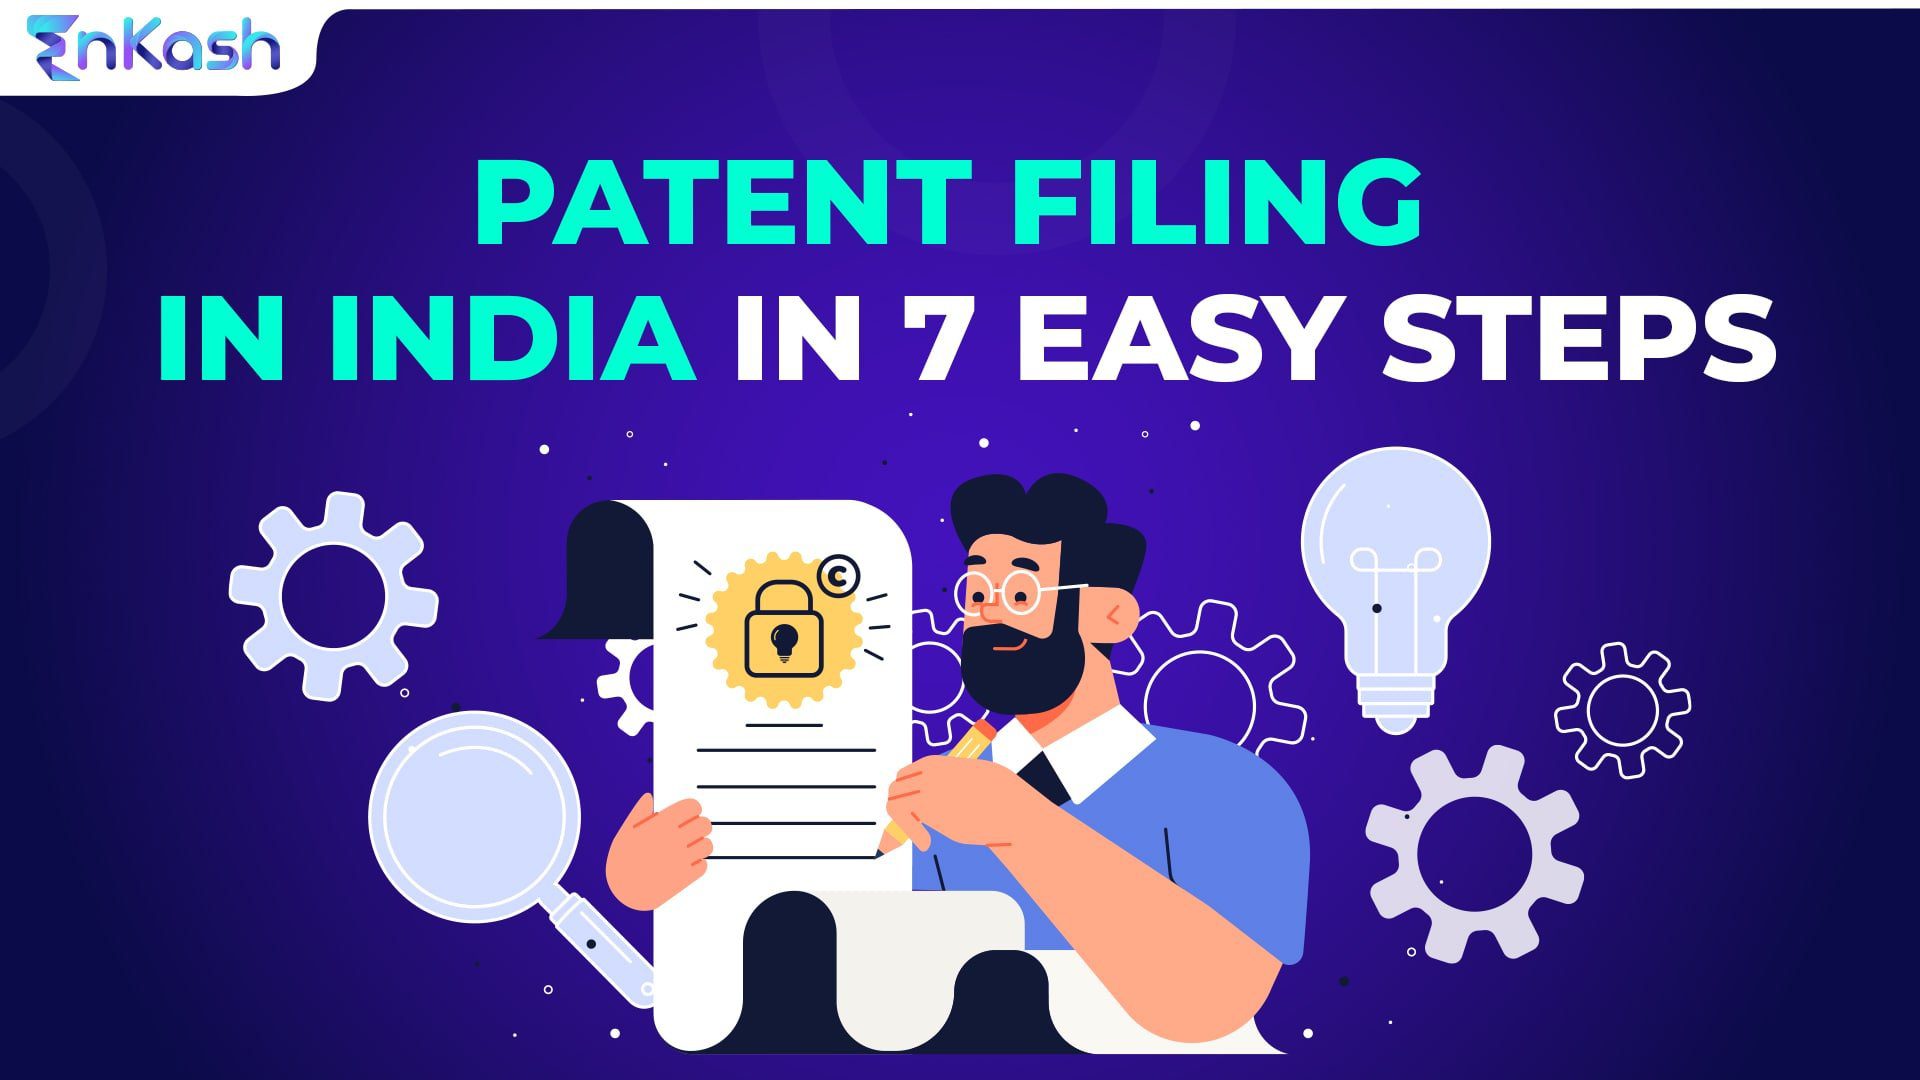 Patent filing in India